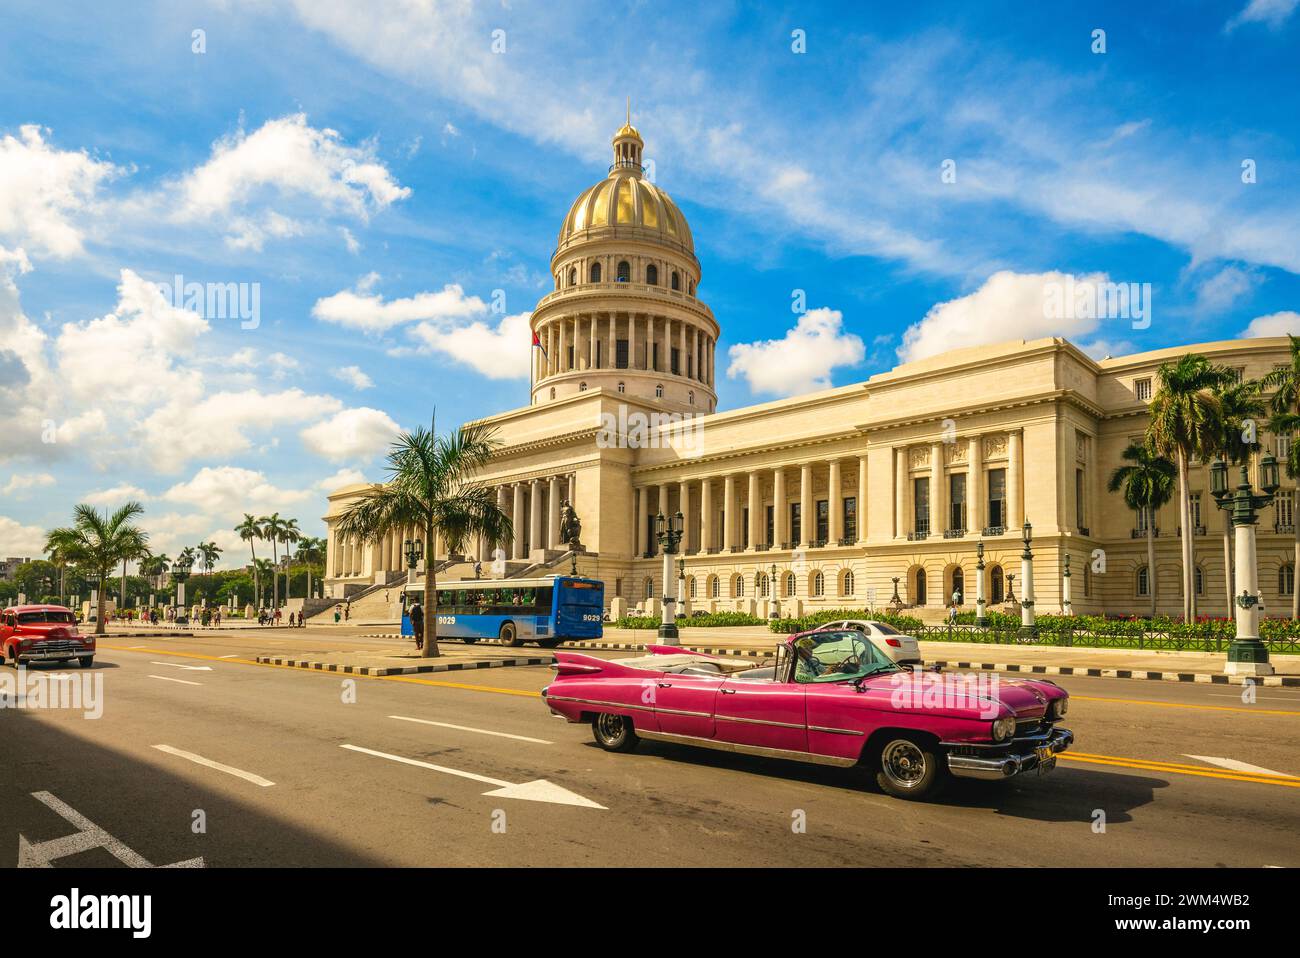 National Capitol Building und Oldtimer in havanna, kuba Stockfoto